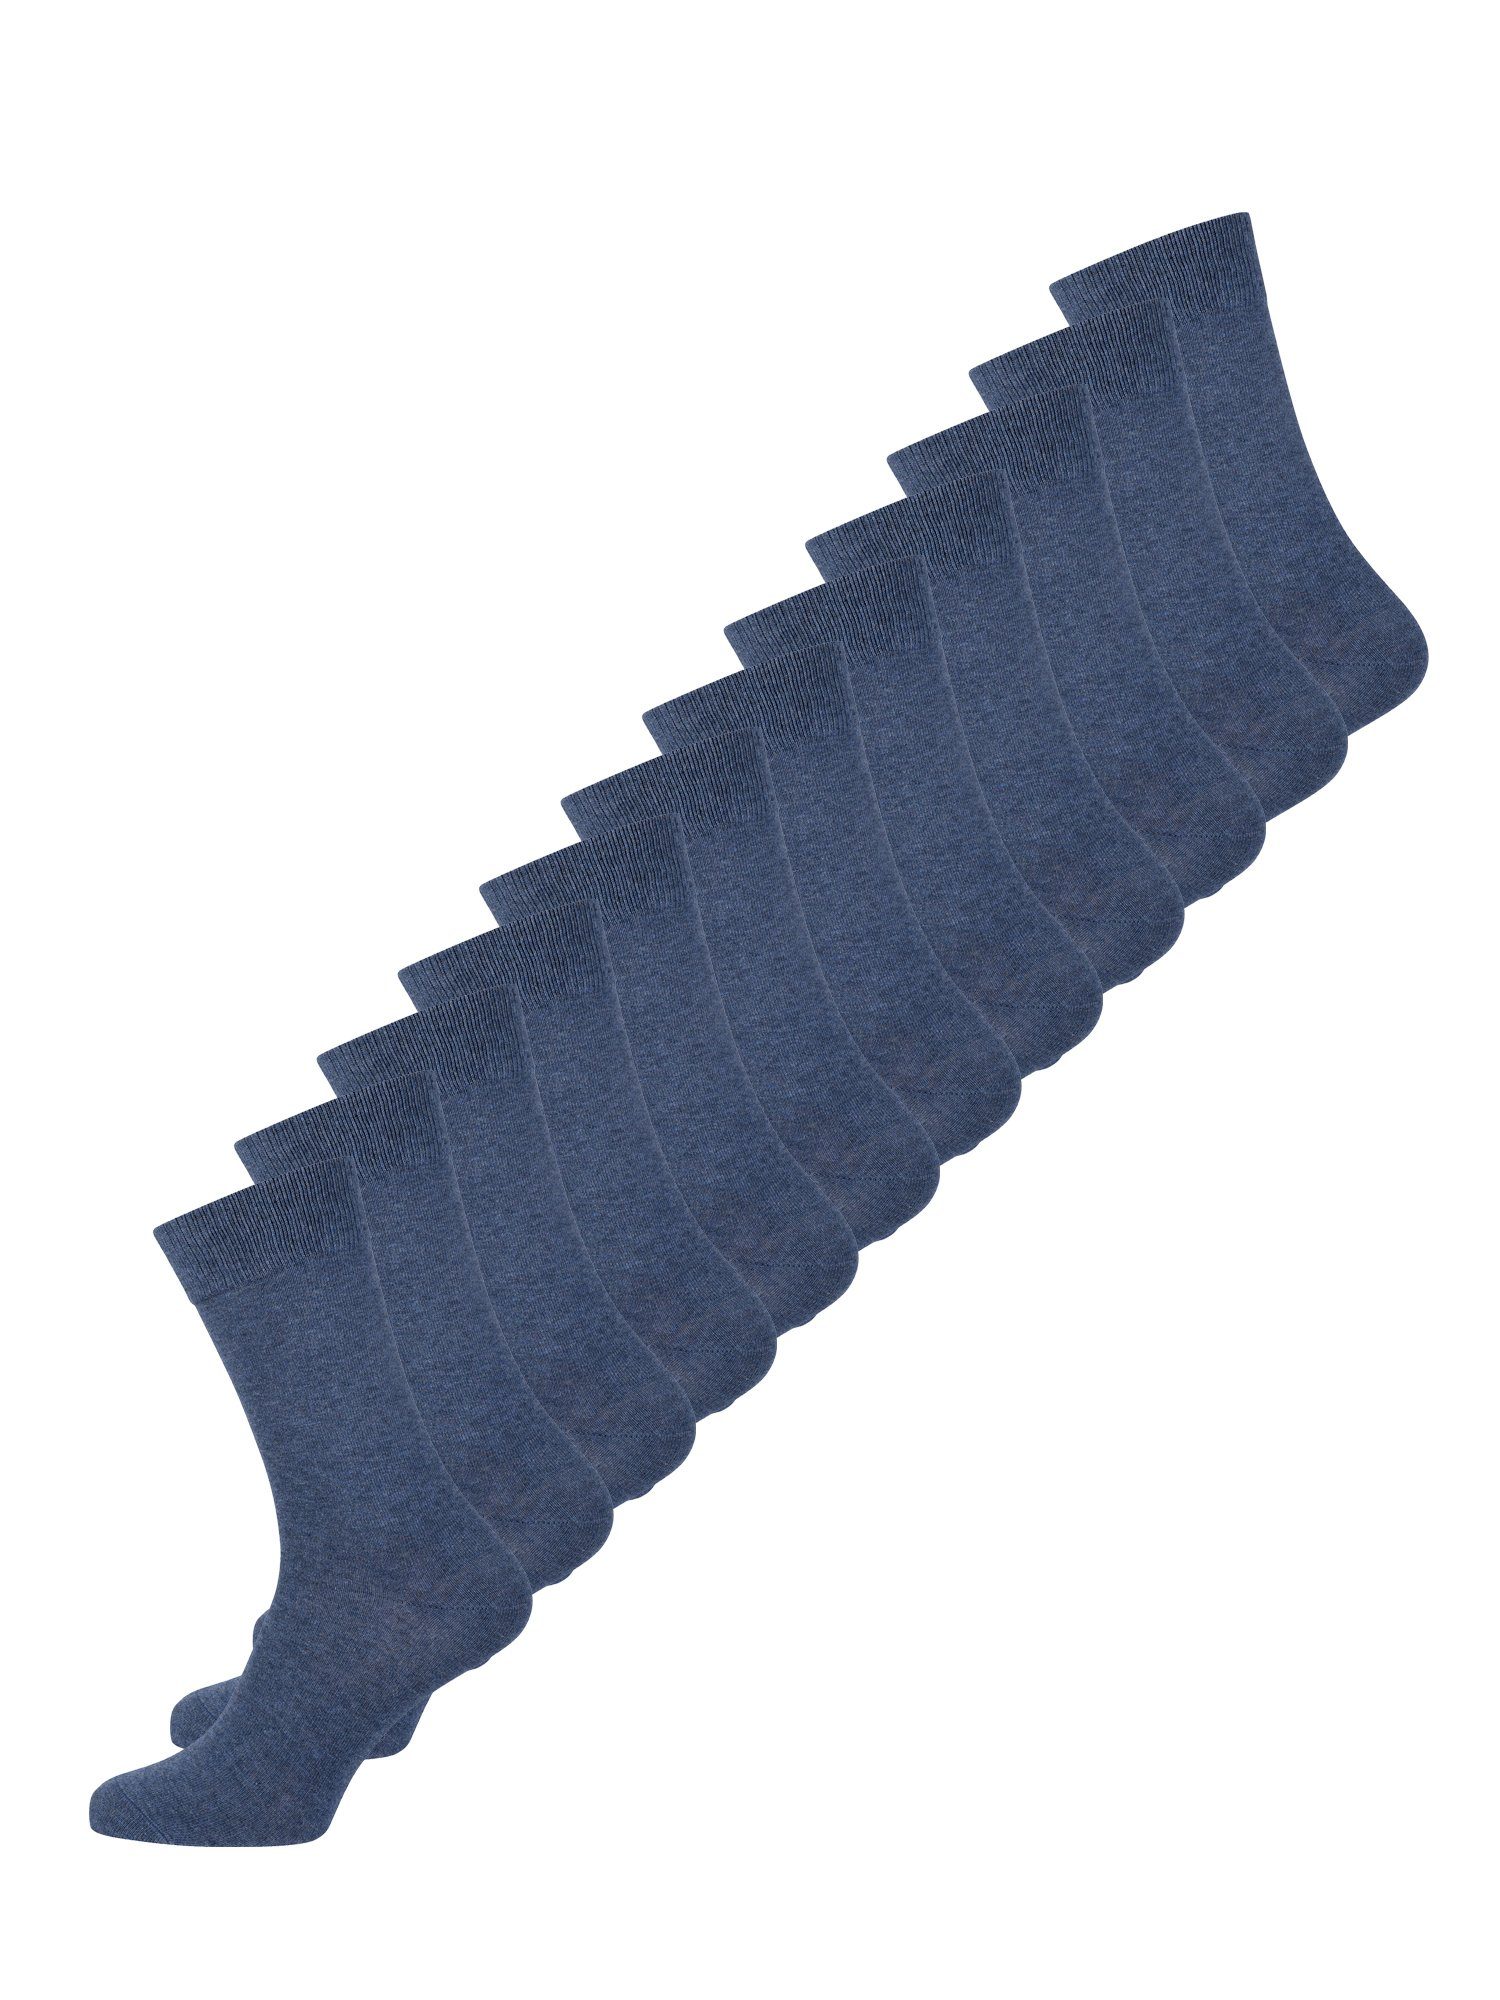 Nur Der Basicsocken günstig Socken uni (12-Paar) jeansmelange Business Baumwolle